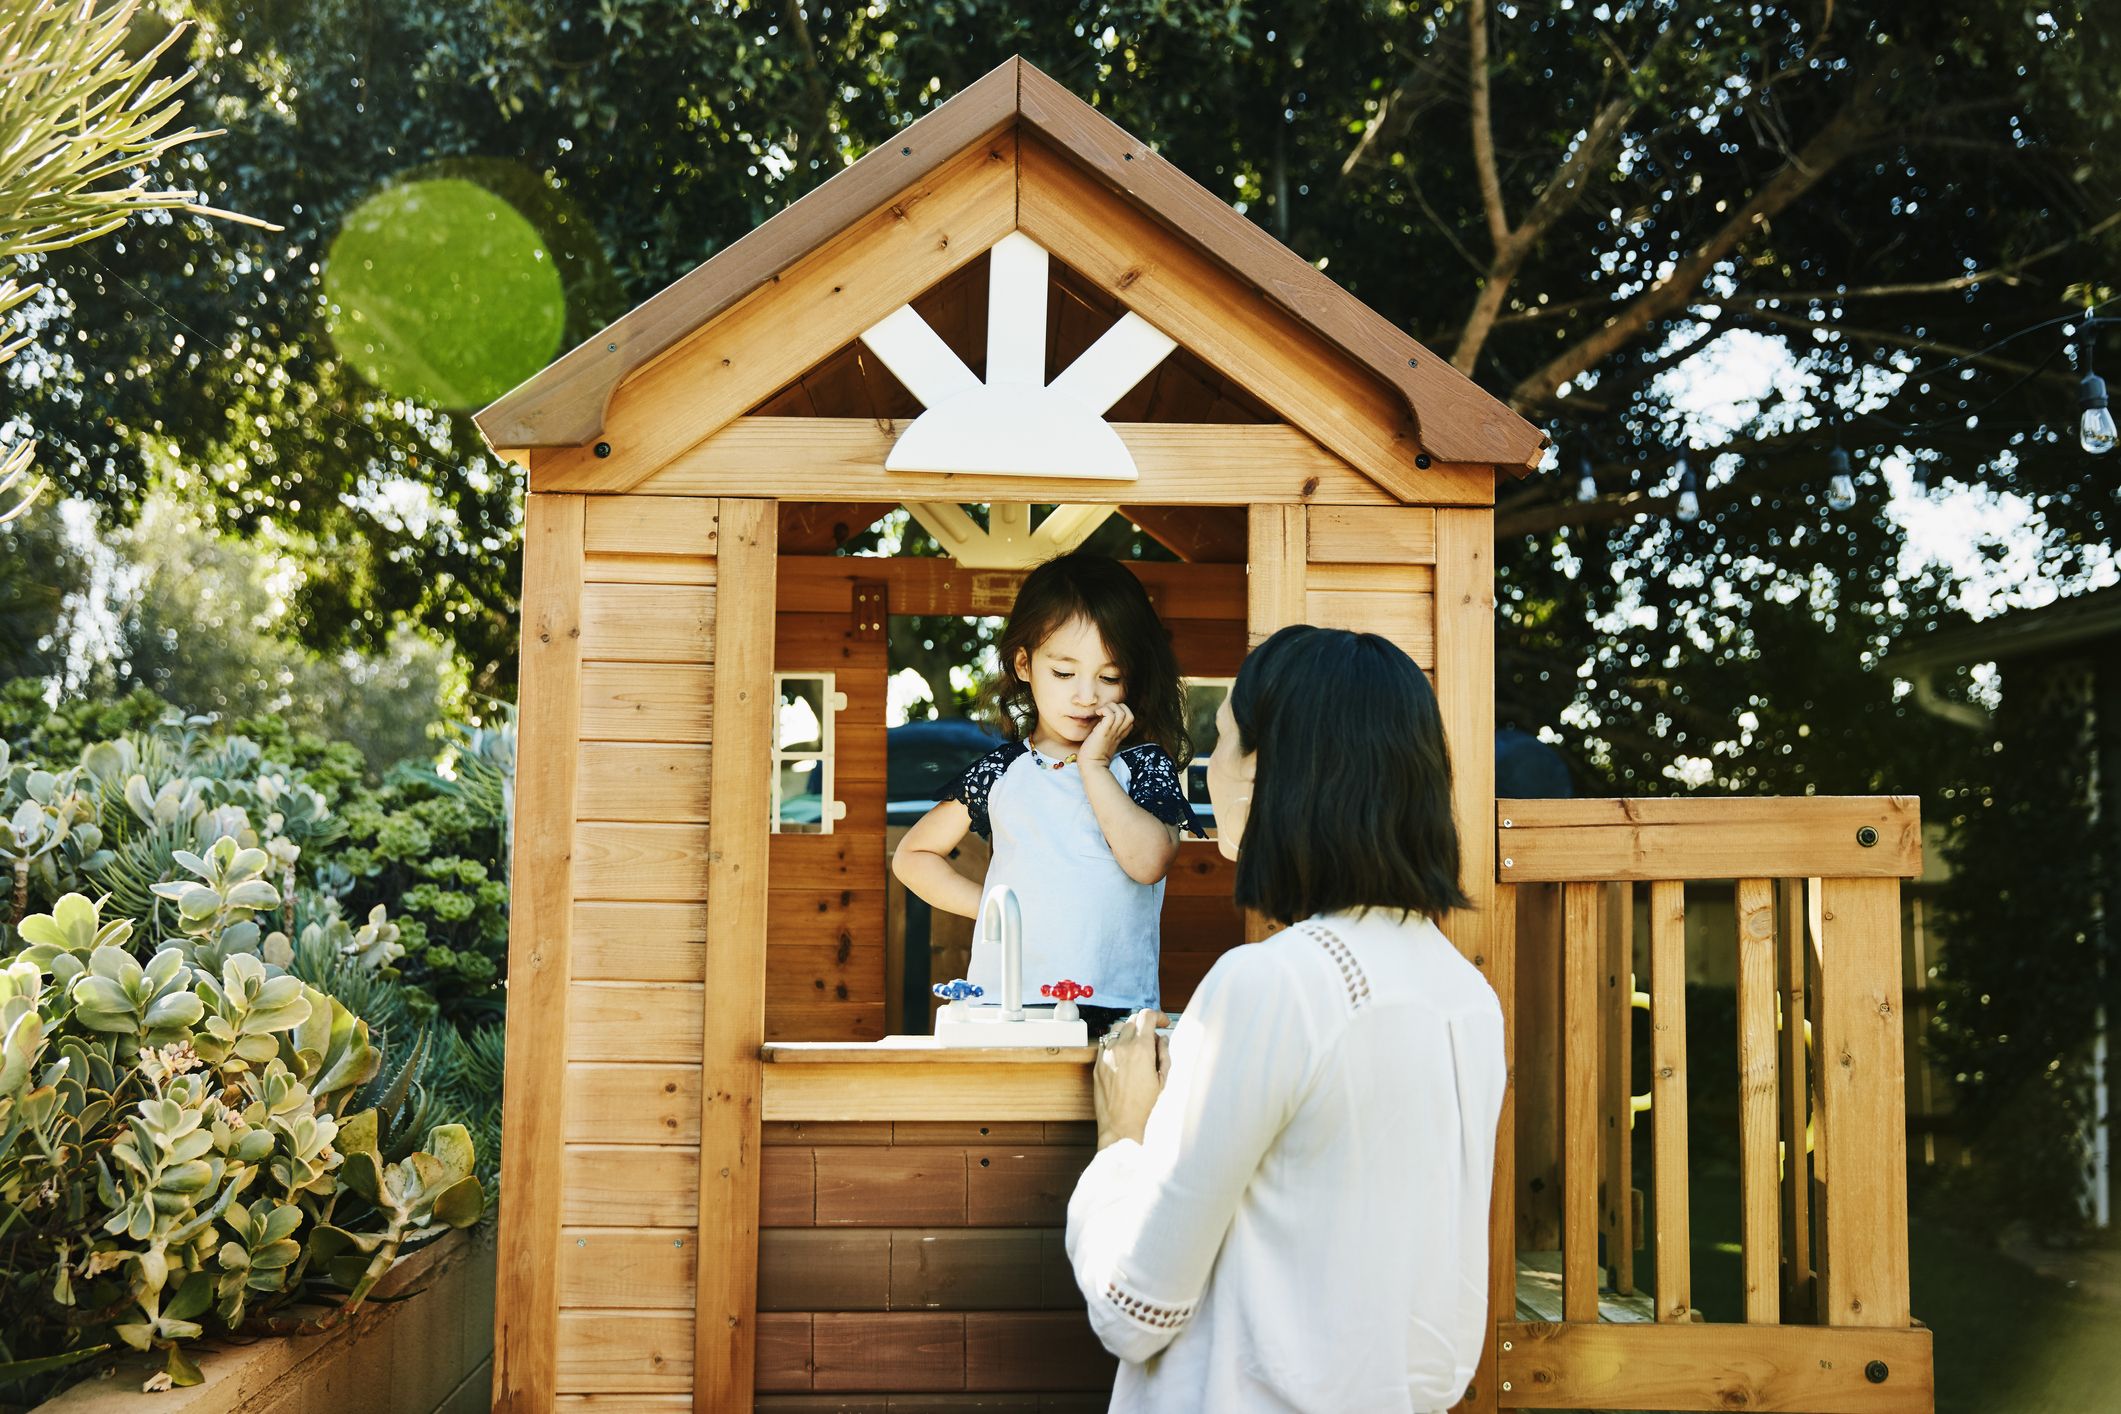 Backyard Playhouse Wooden Outdoor House Playset Cottage Cedar Kids Fun Brown 